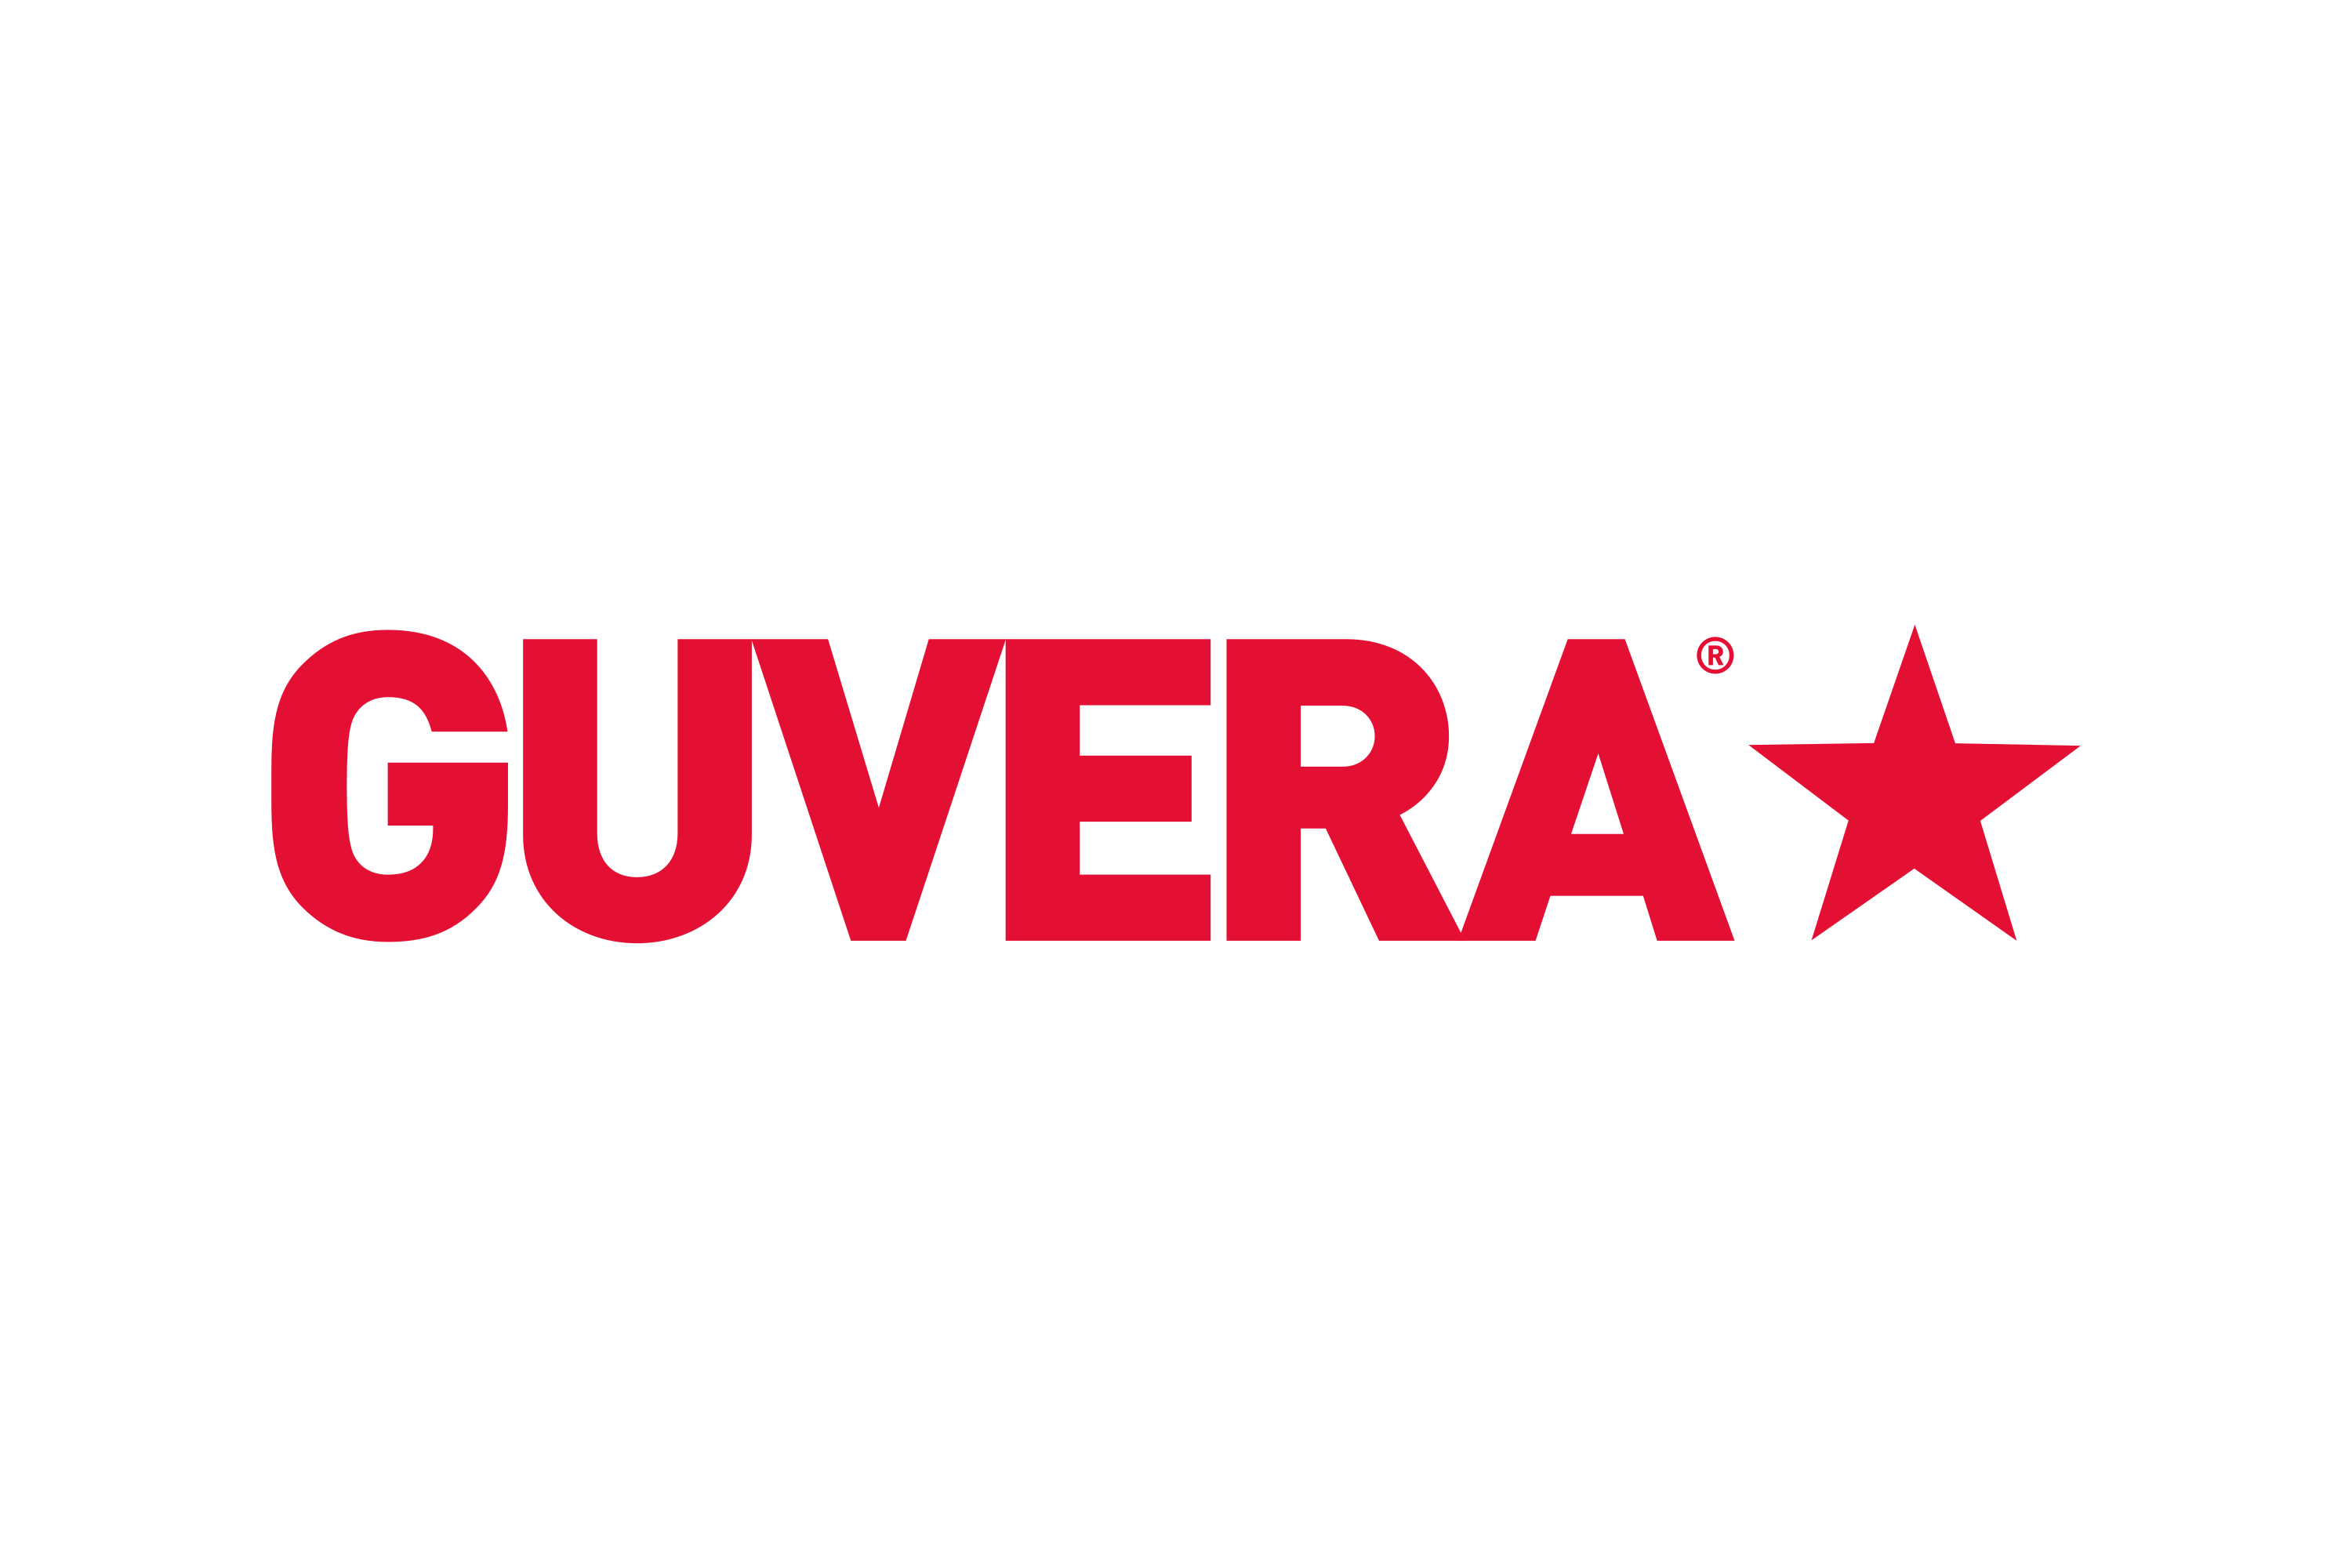 Download Guvera Logo in SVG Vector or PNG File Format - Logo.wine